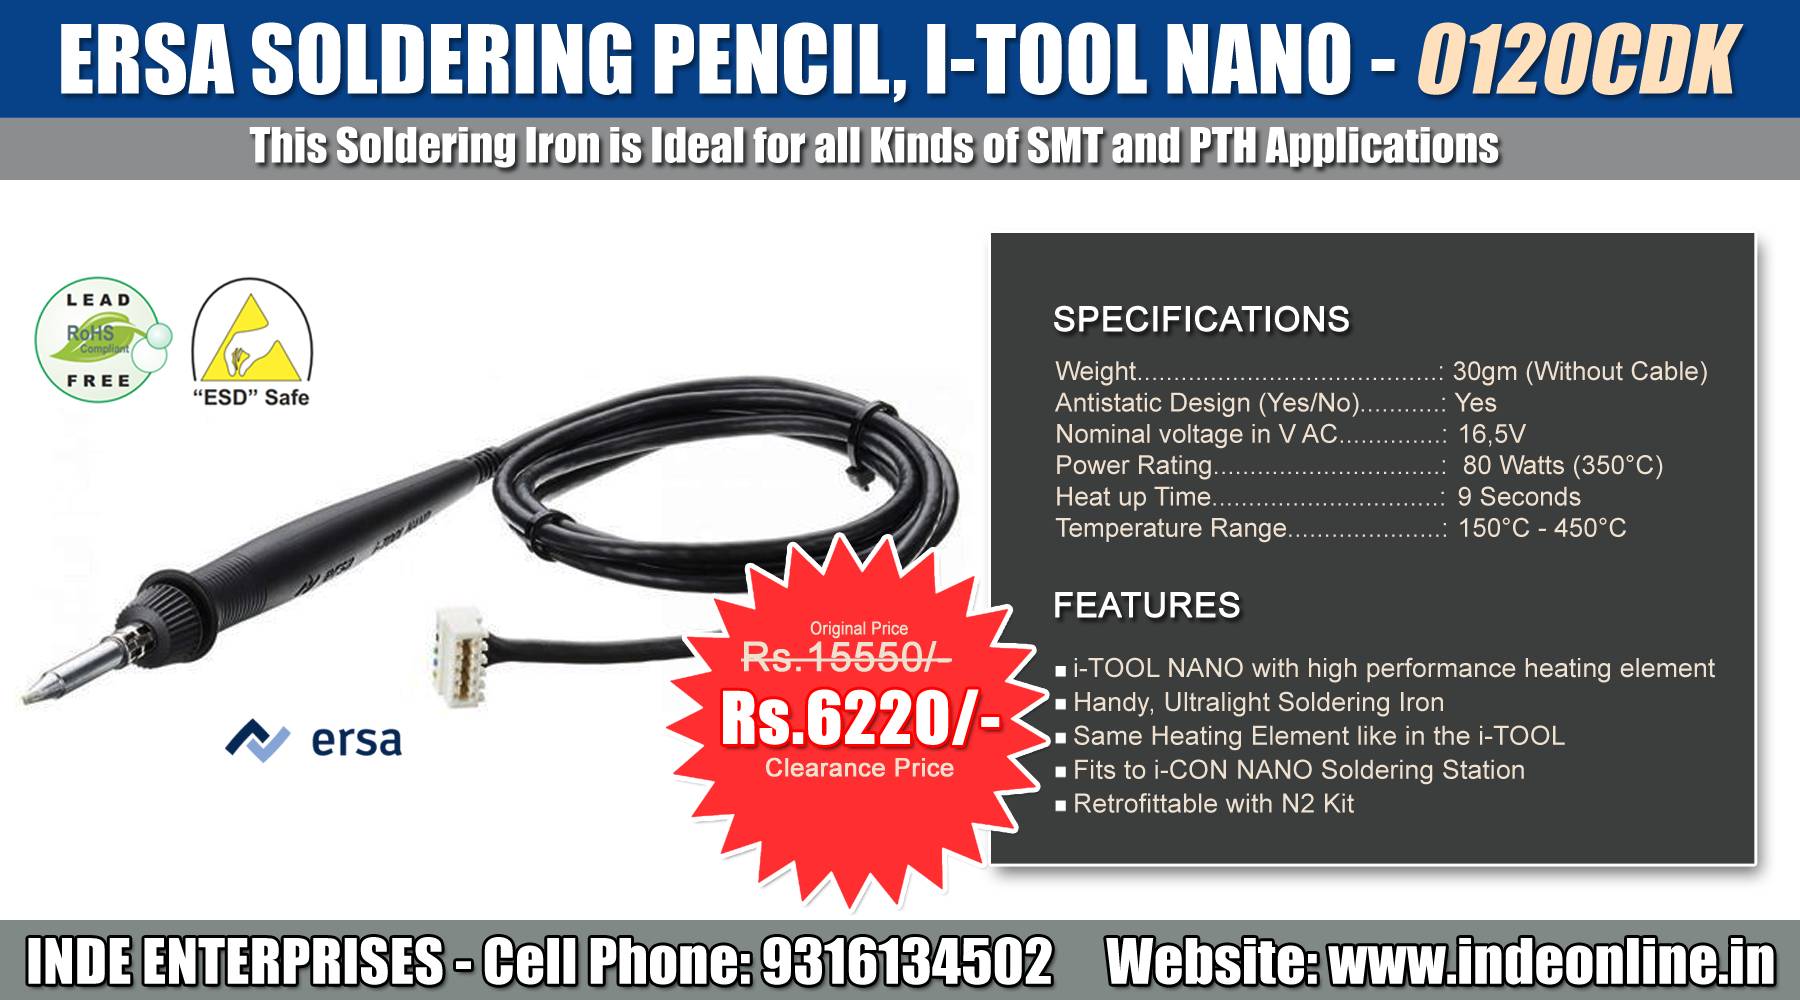 ERSA Soldering Iron - I-tool Nano Price Rs.6220/-